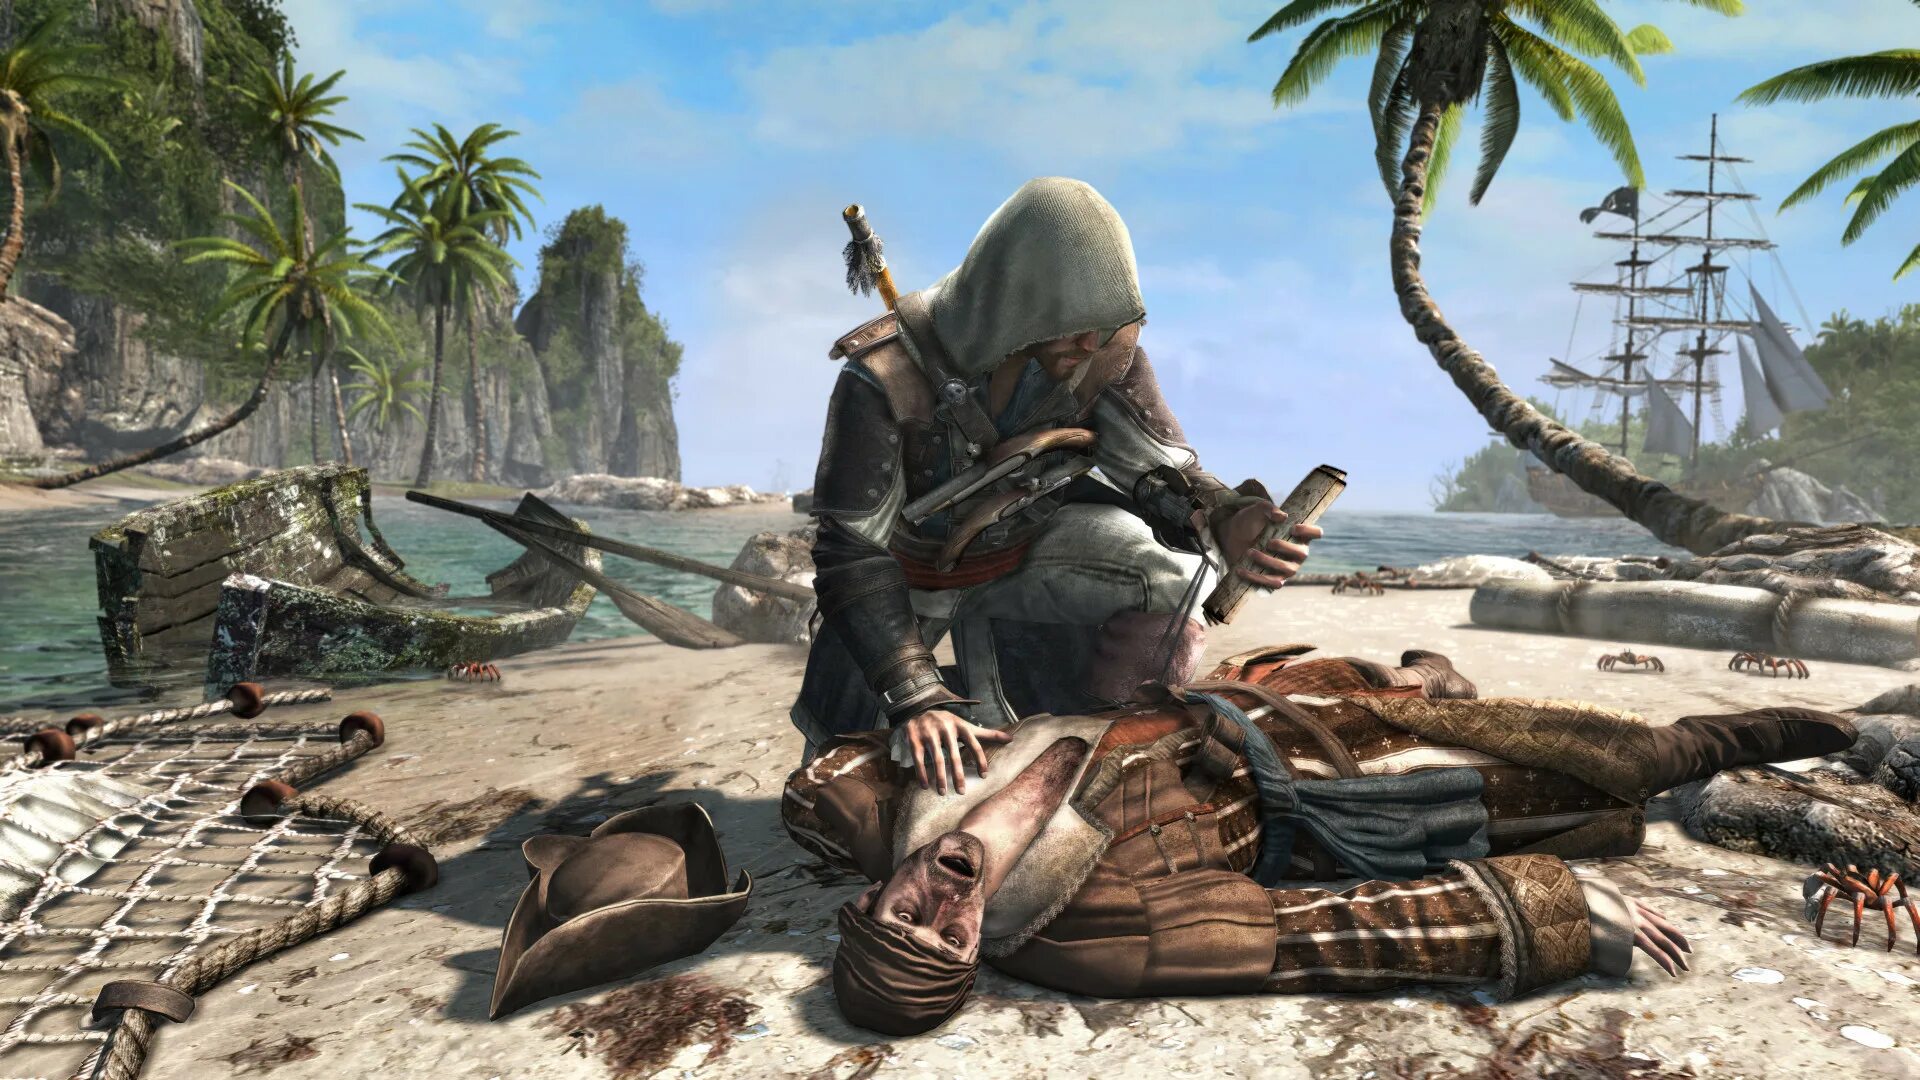 Ассасин Крид 4. Assassin's Creed 4 Black Flag геймплей. Гавана ассасин Крид 4. Ассасин Крид 4 Блэк флаг. Ассасин 4 часть